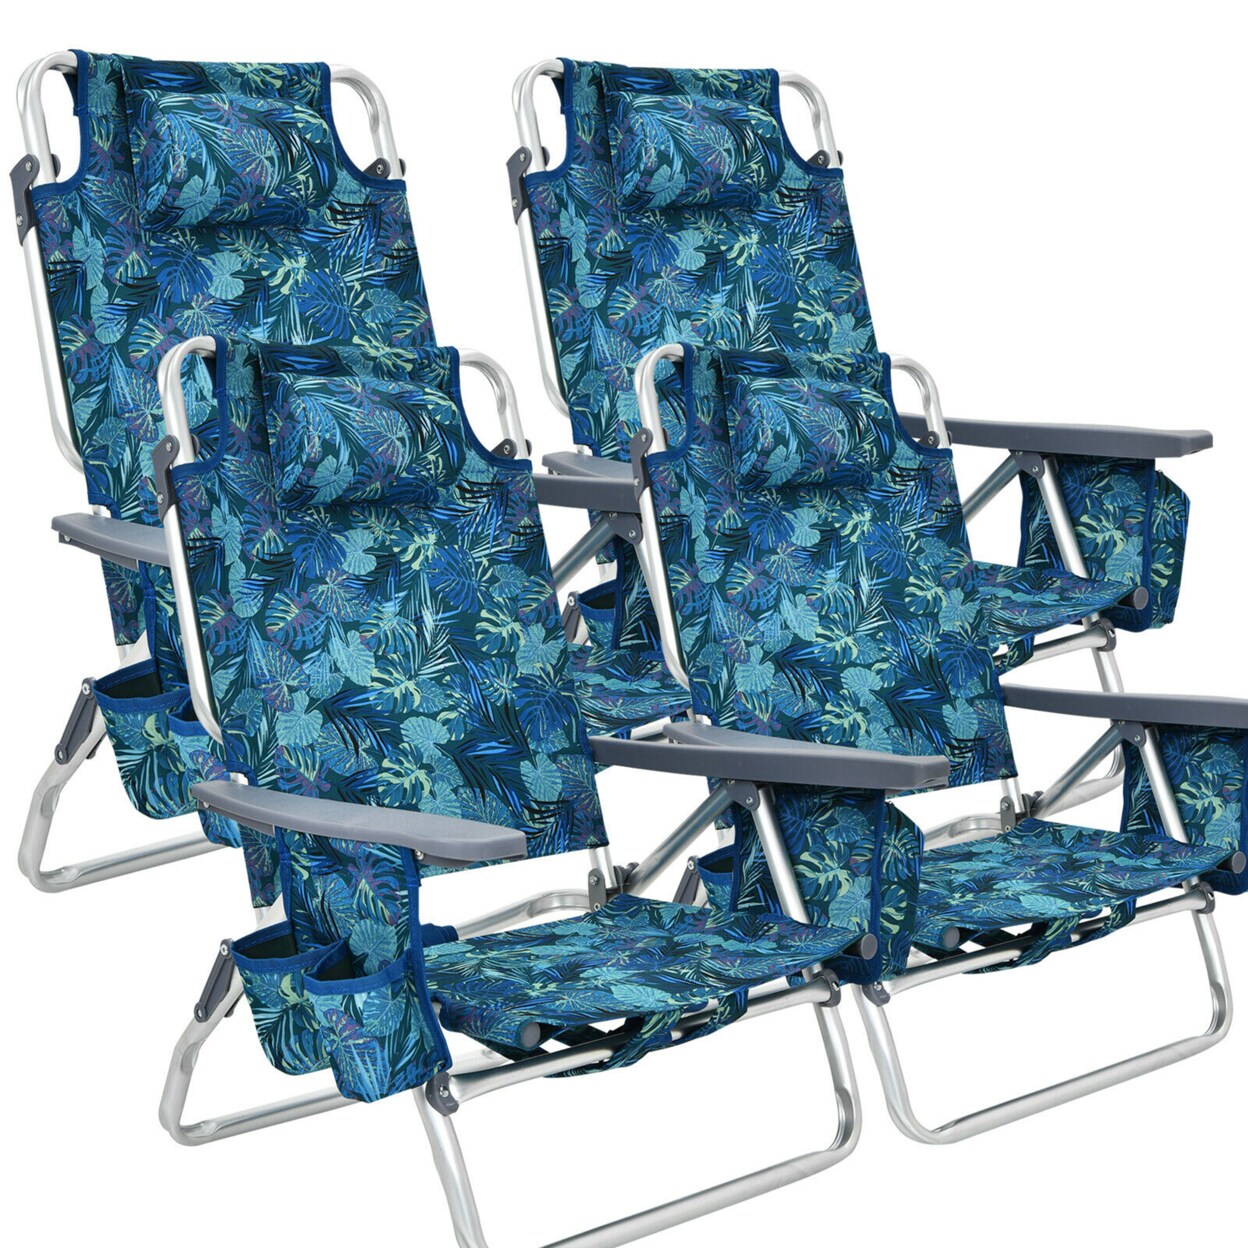 Gymax 4PCS Folding Backpack Beach Chair Reclining Camping Chair w/ Storage Bag